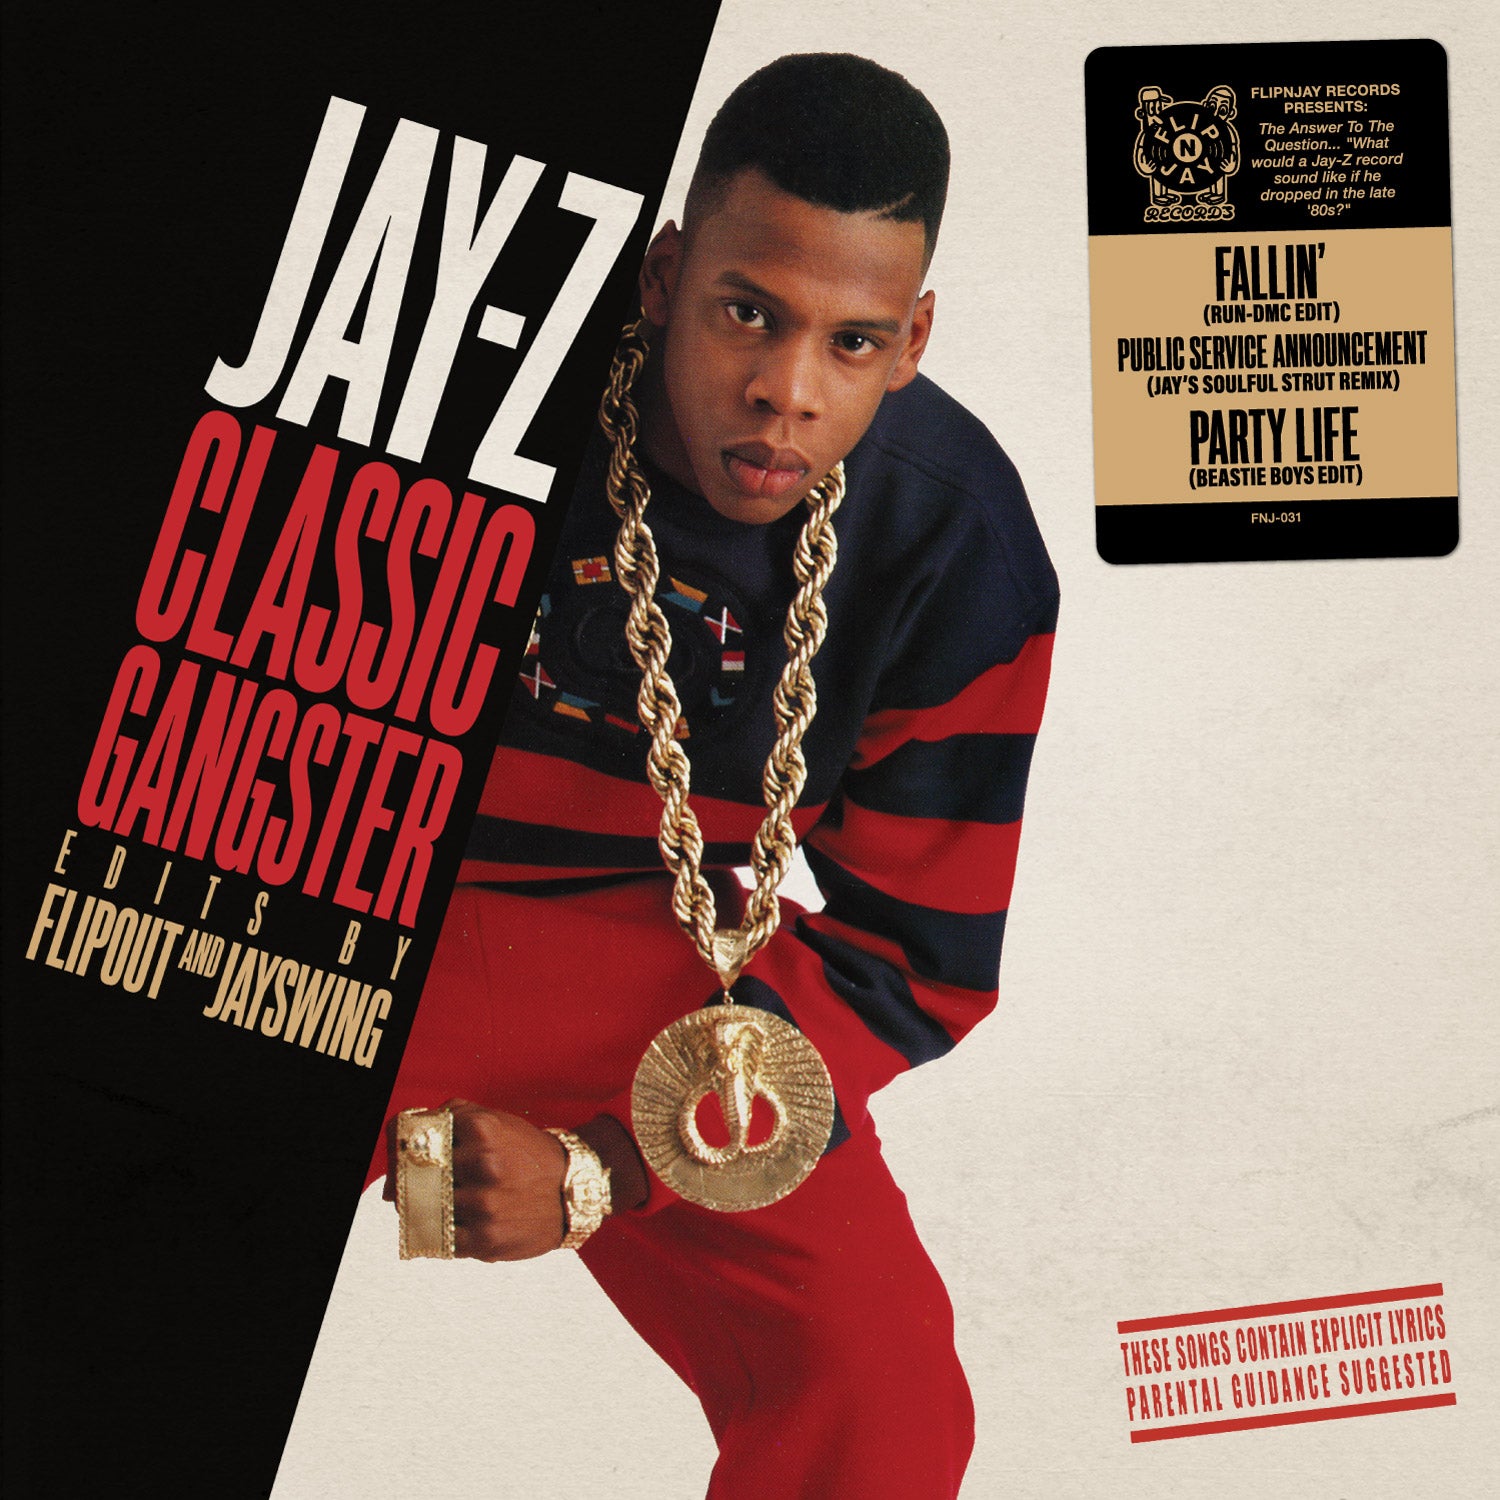 FNJ-031) Jay-Z Classic Gangster Edits: “Fallin' (Run DMC EDIT)” b 